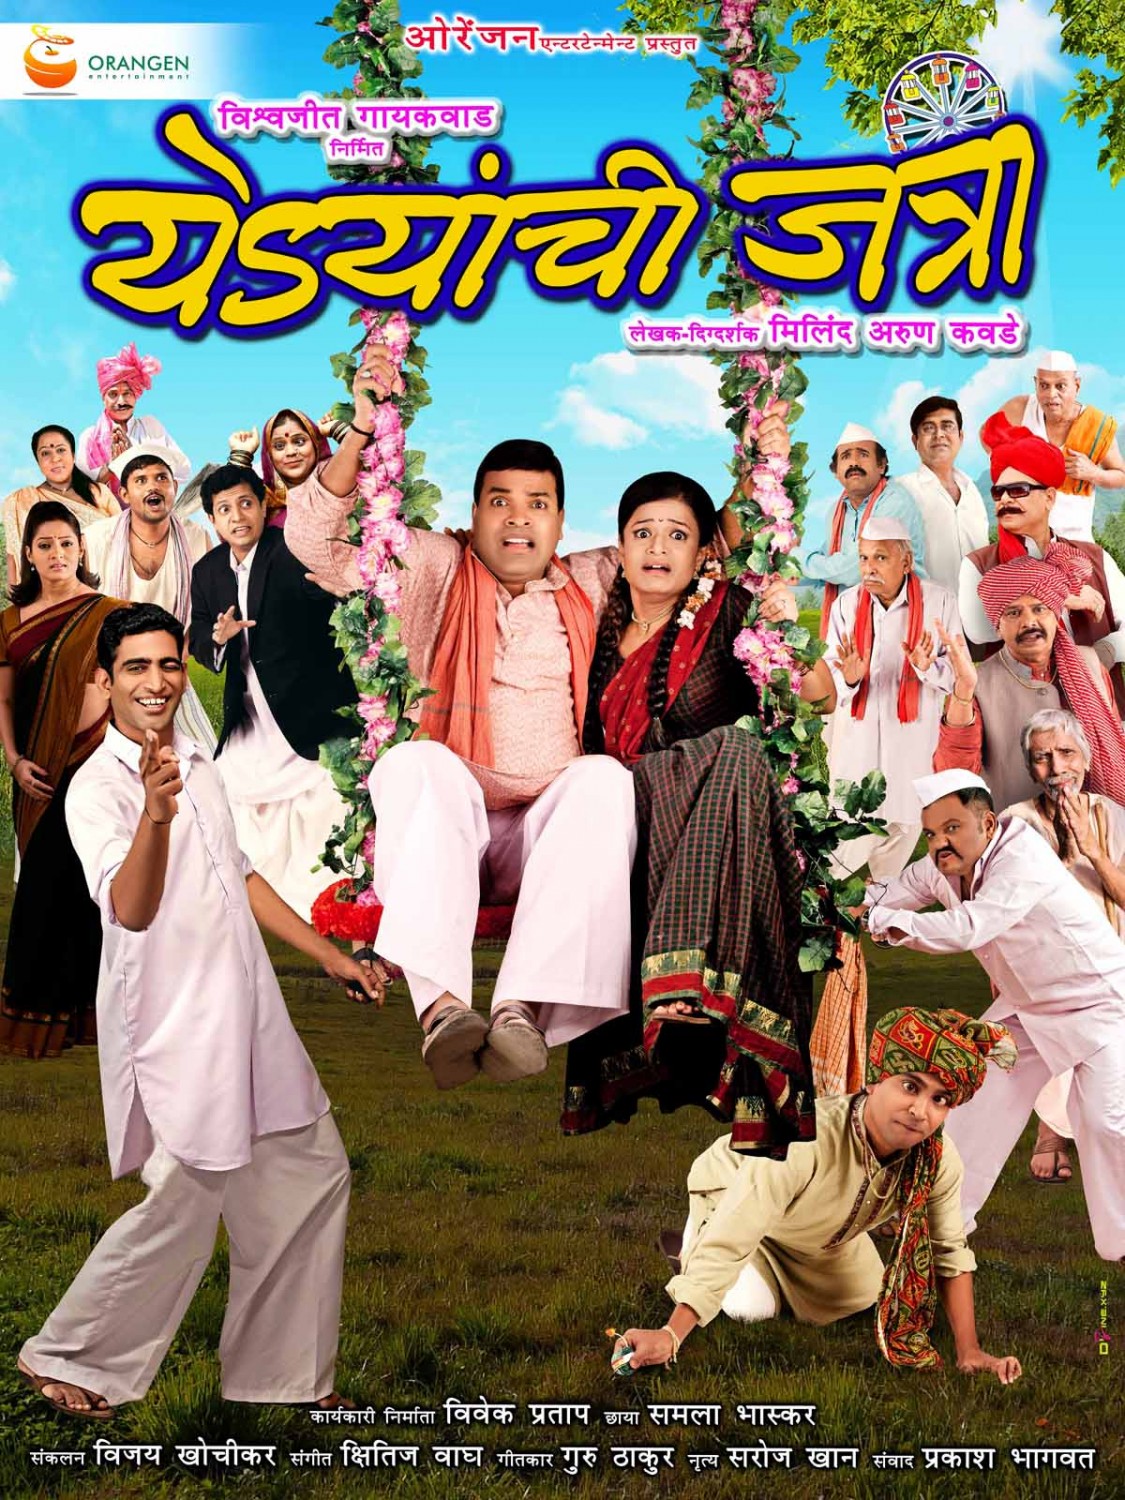 Extra Large Movie Poster Image for Yedyanchi Jatraa (#5 of 7)